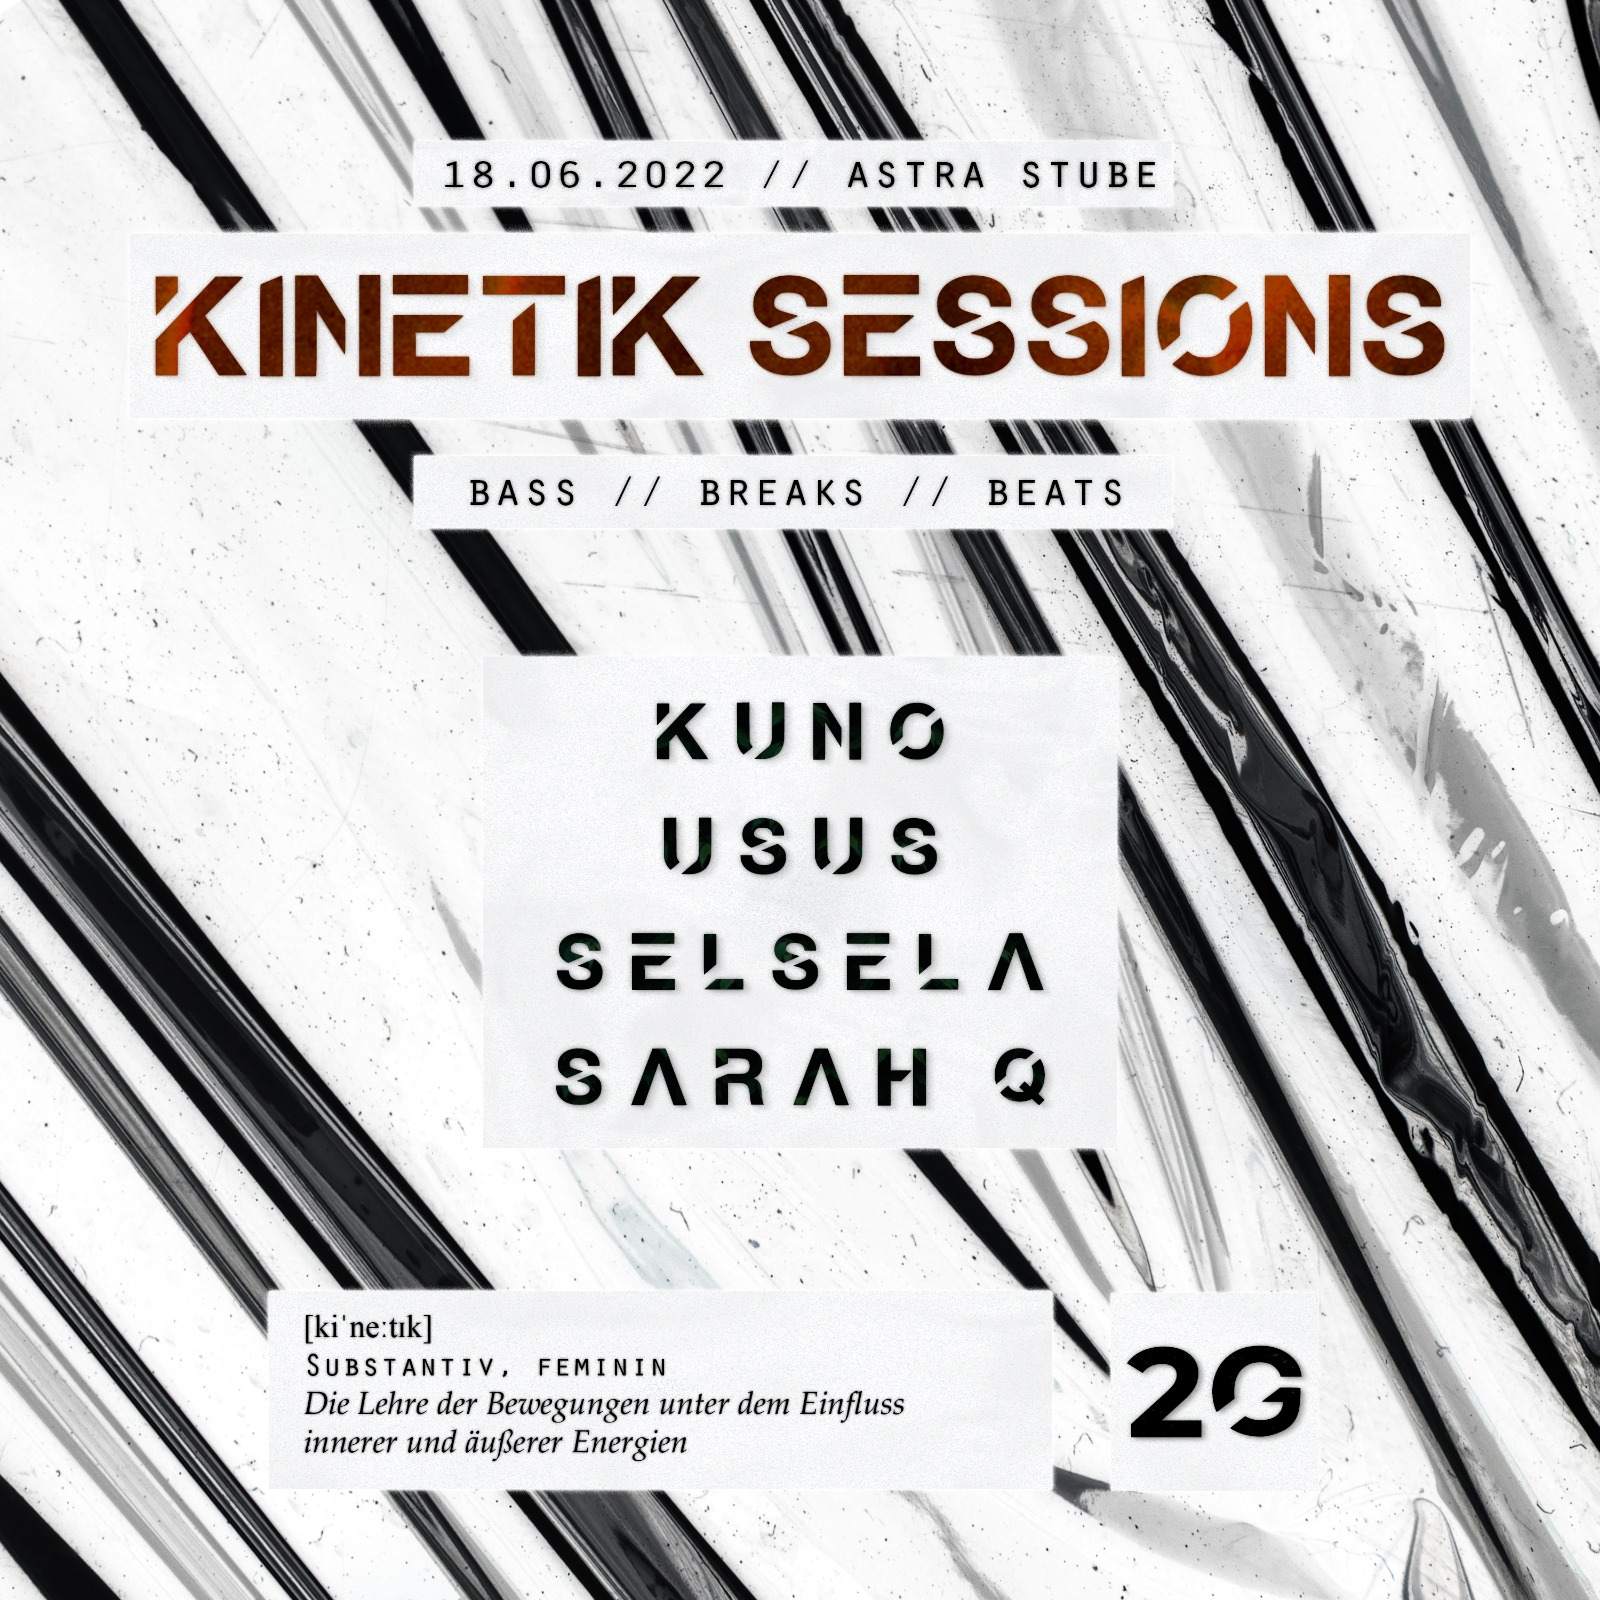 Kinetik Sessions - フライヤー表